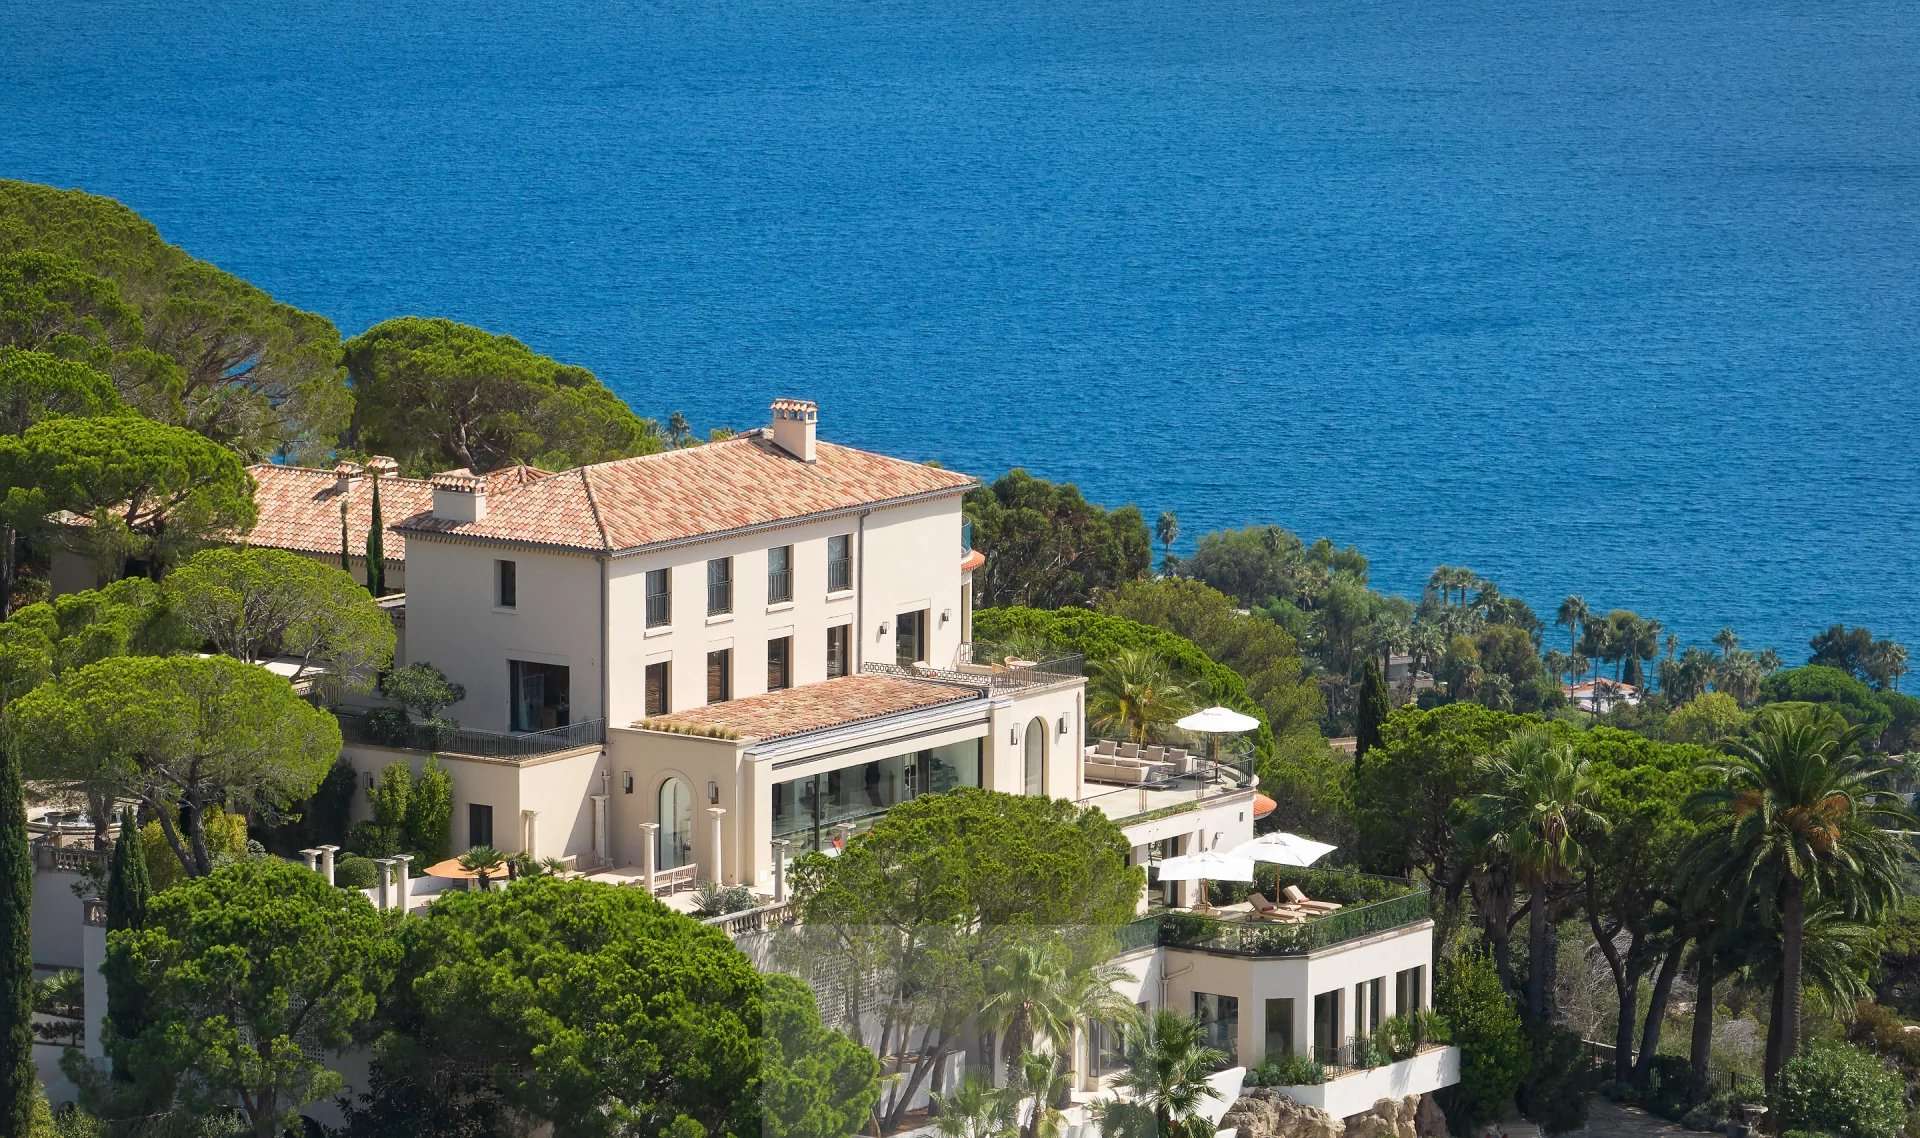 Californie, Cannes, Alpes-Maritimes, 06400 | Property for sale | Savills